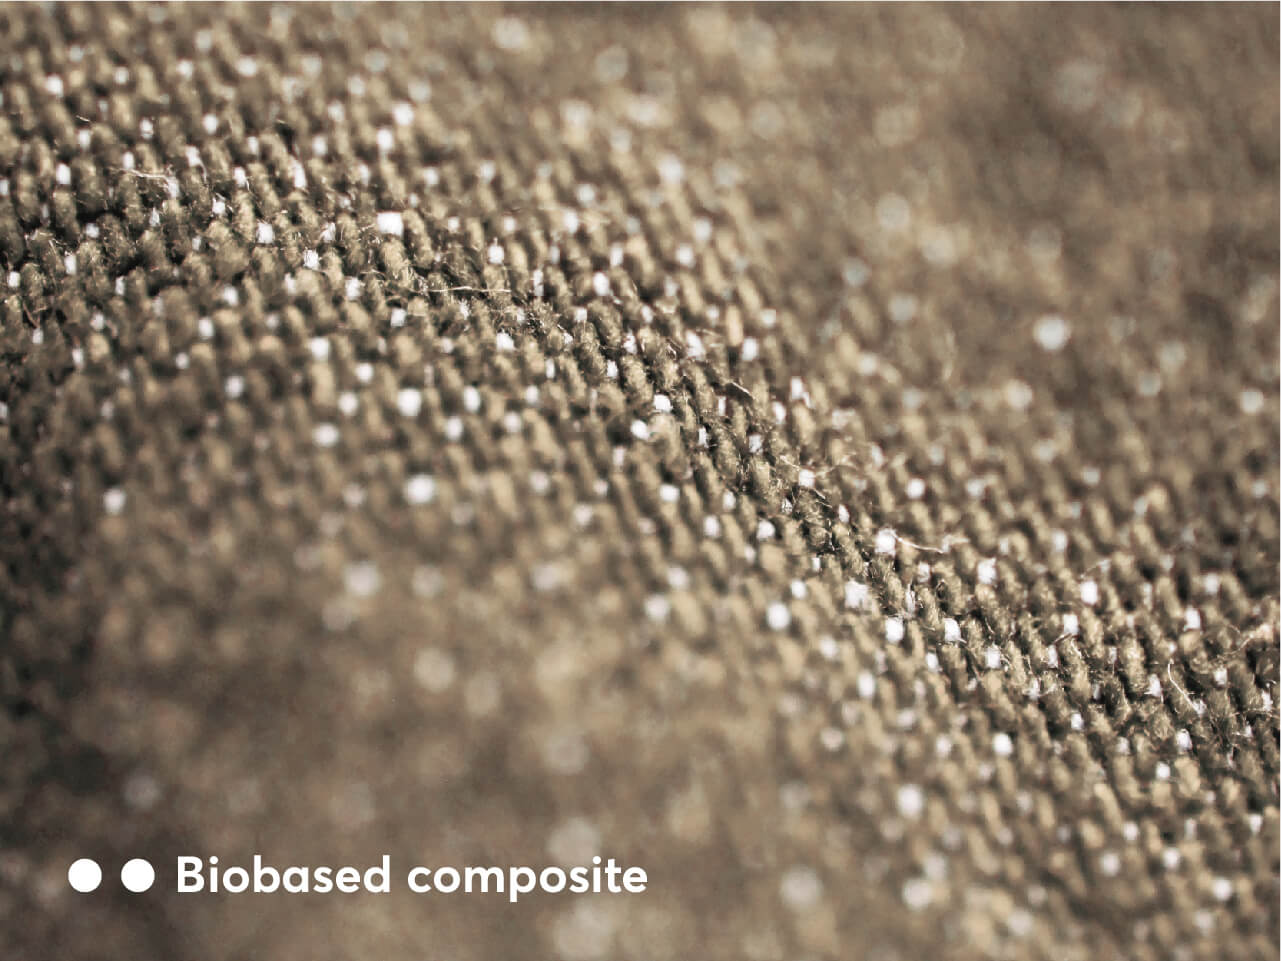 Biobased composite